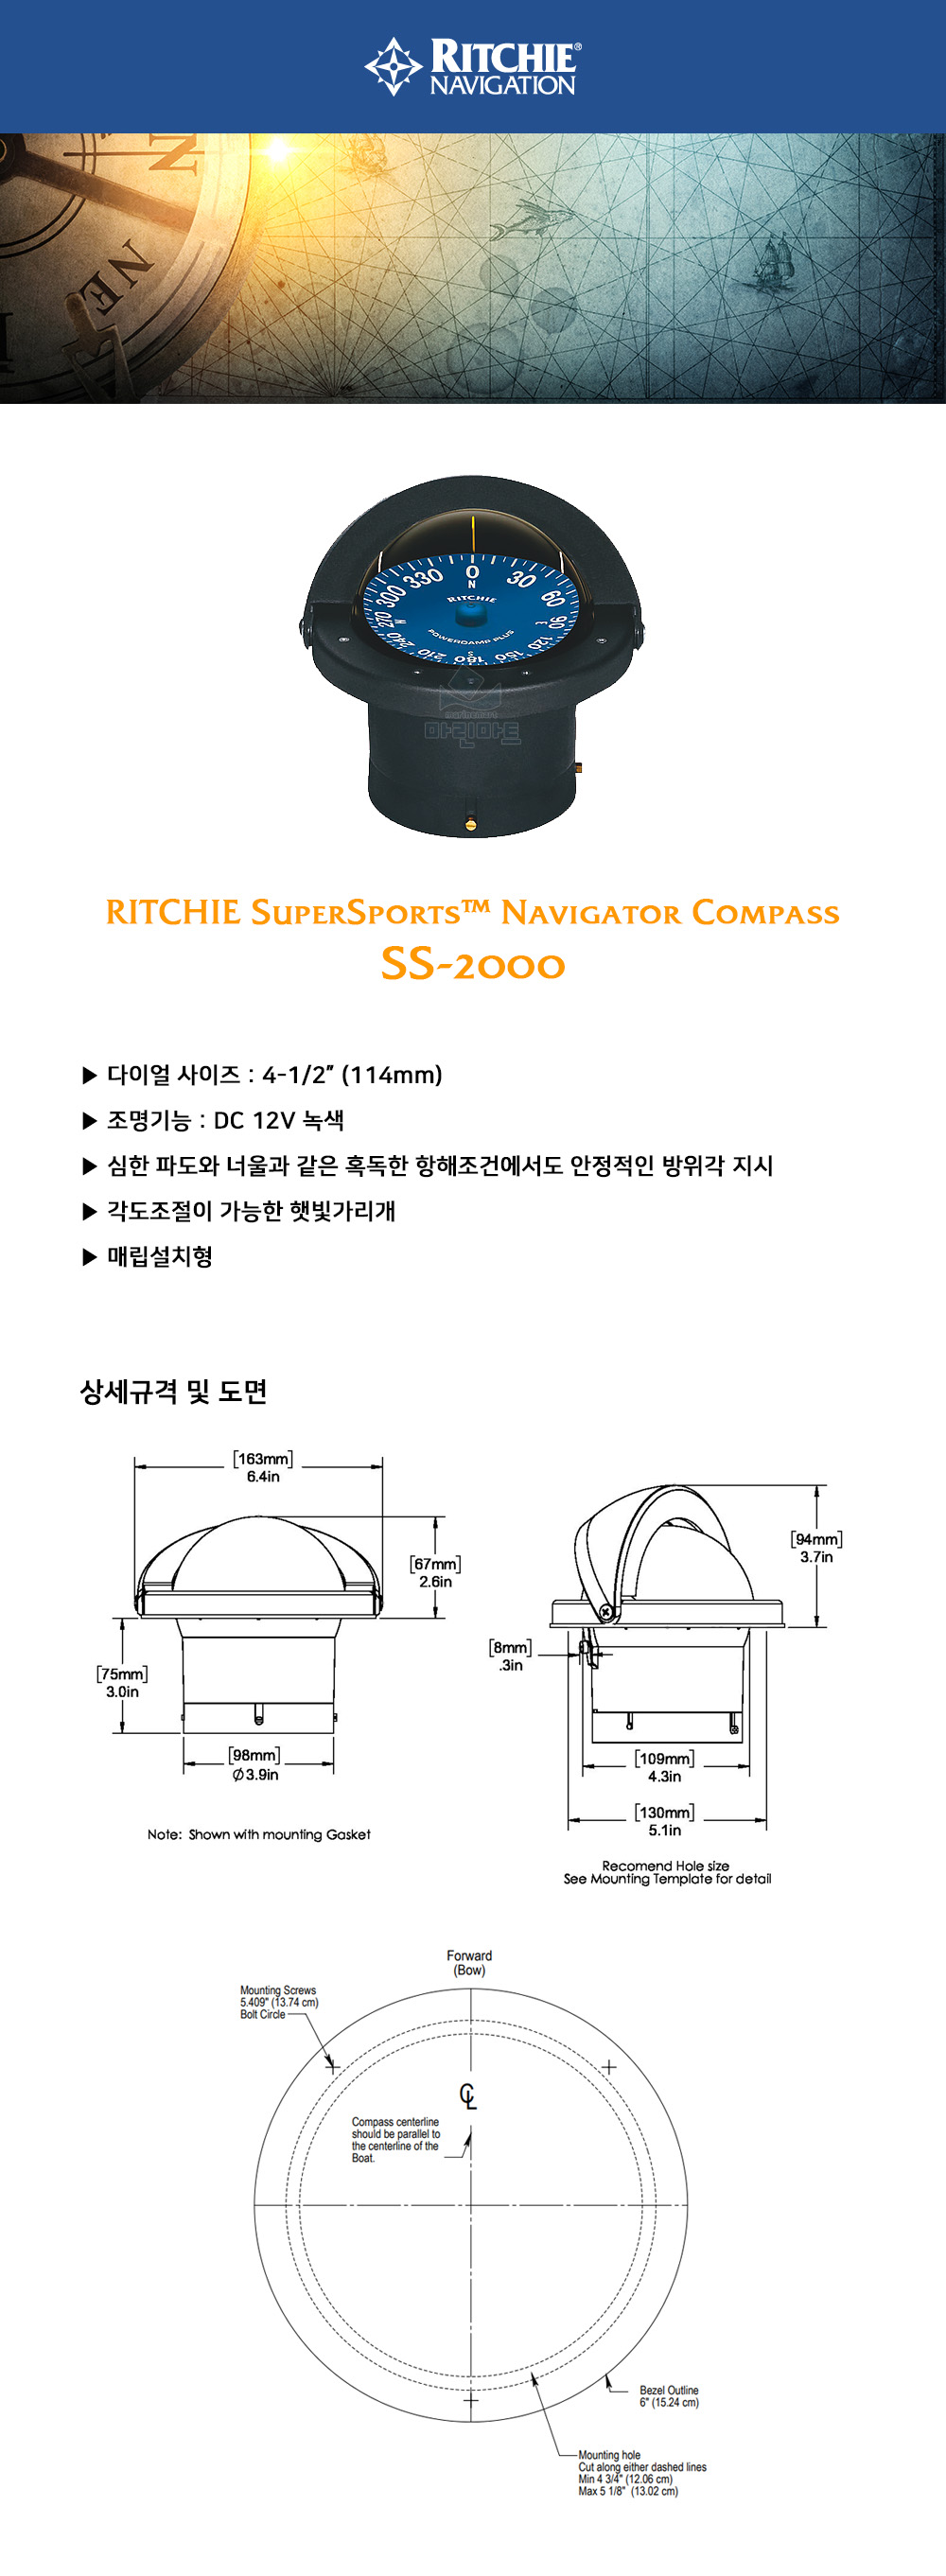 RITCHIE_SS-2000_2_175922.jpg